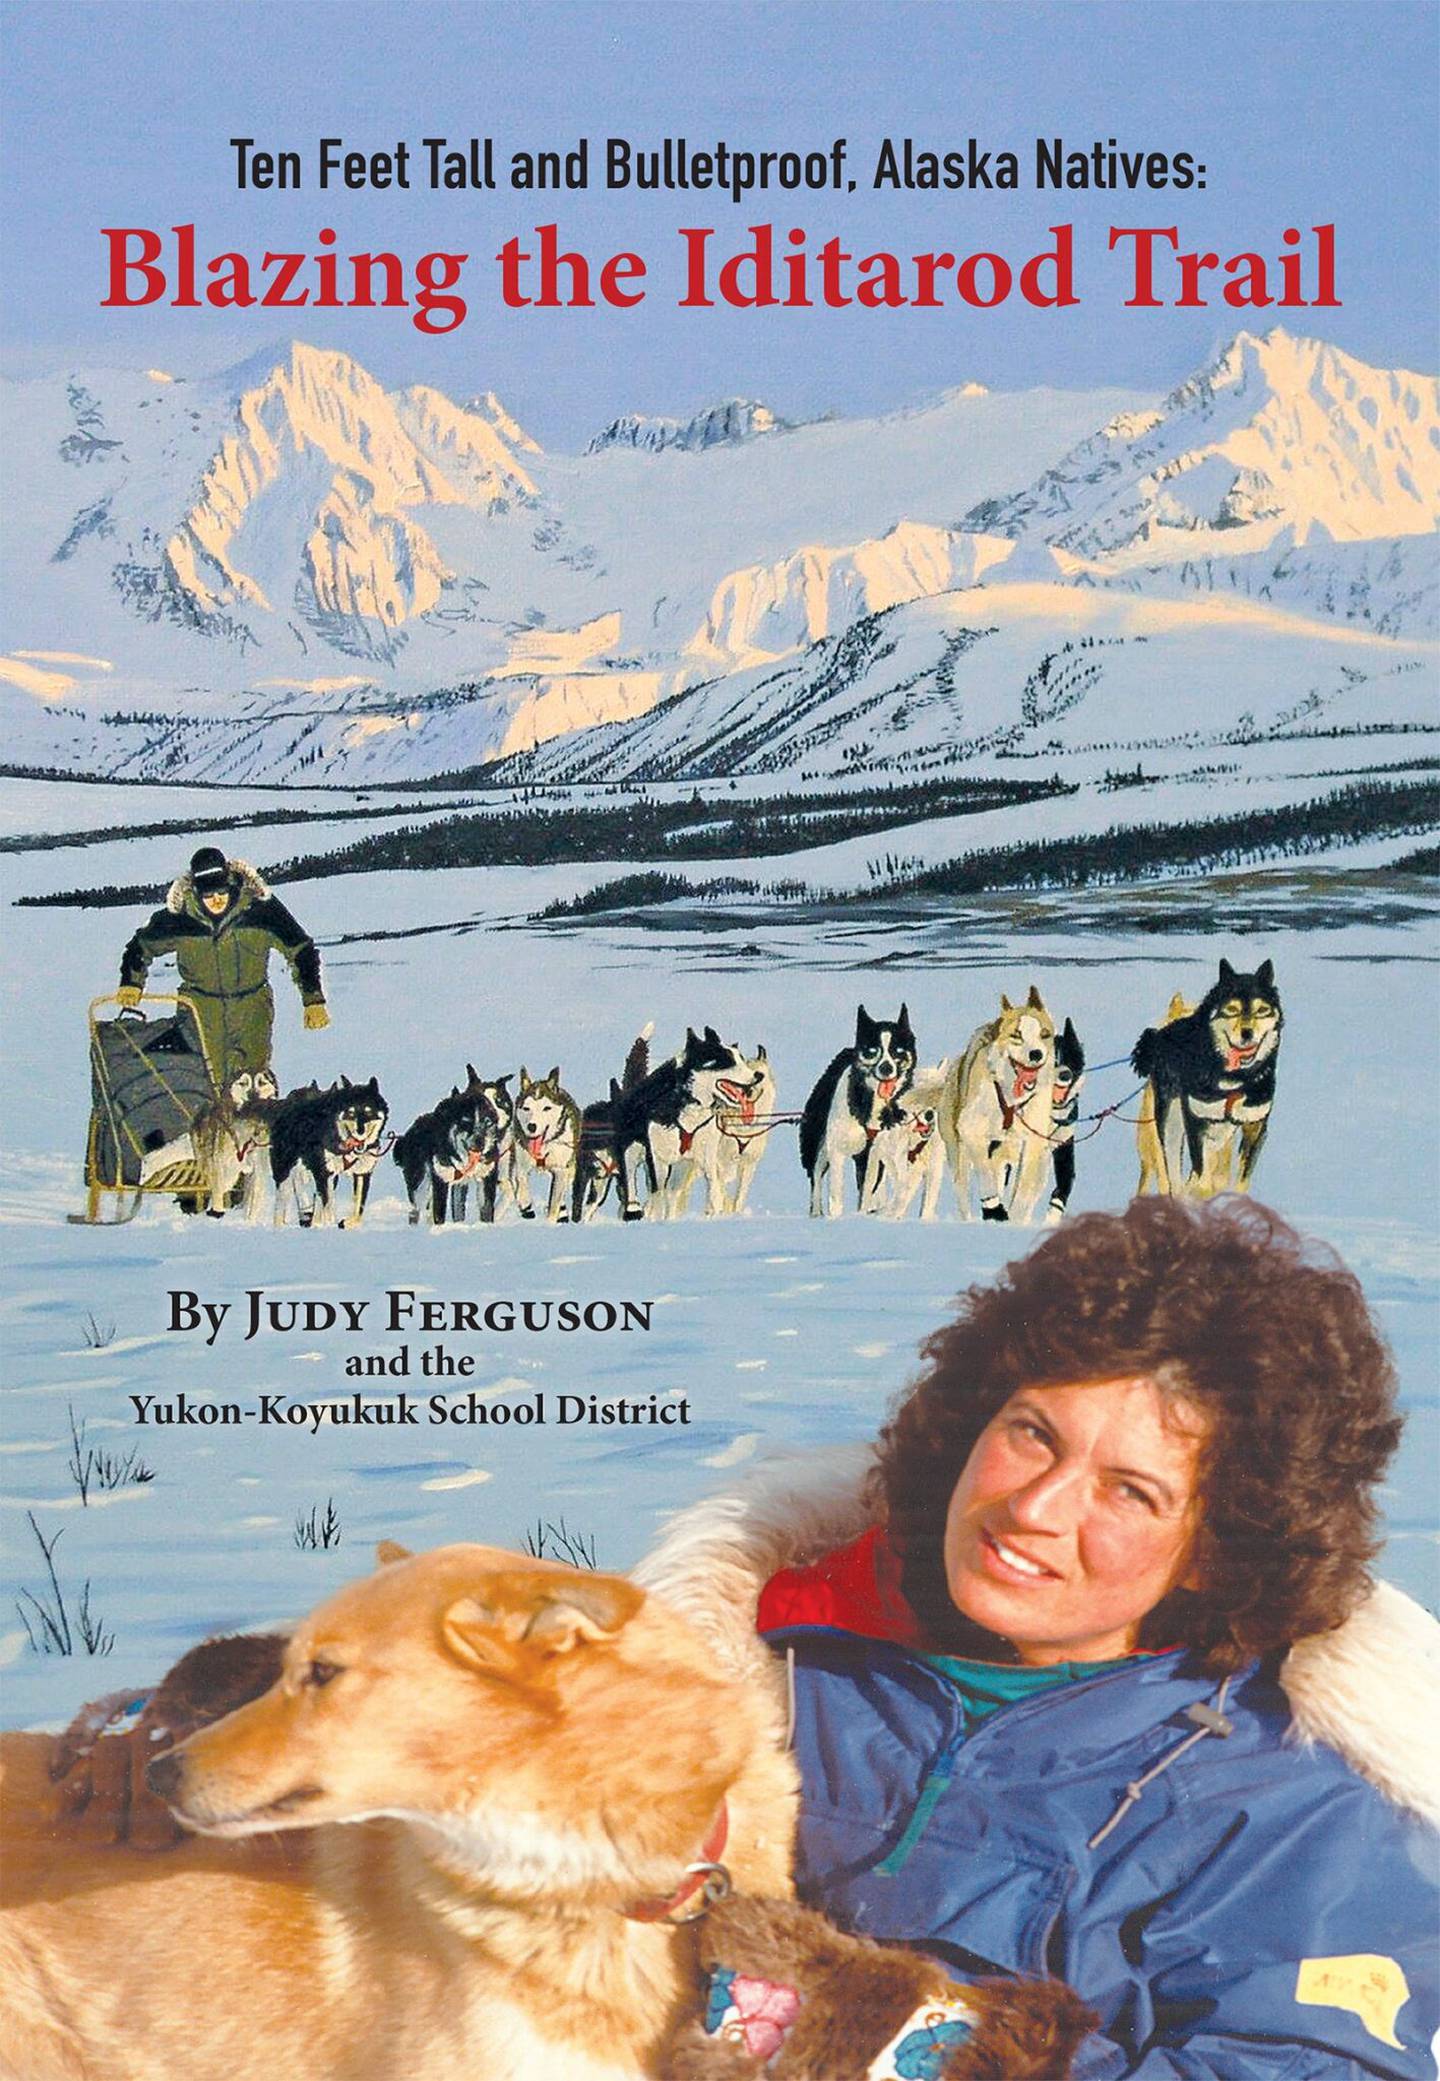 "Ten Feet Tall and Bulletproof, Alaska Natives: Blazing the Iditarod Trail," by Judy Ferguson and the Yukon-Koyukuk School District